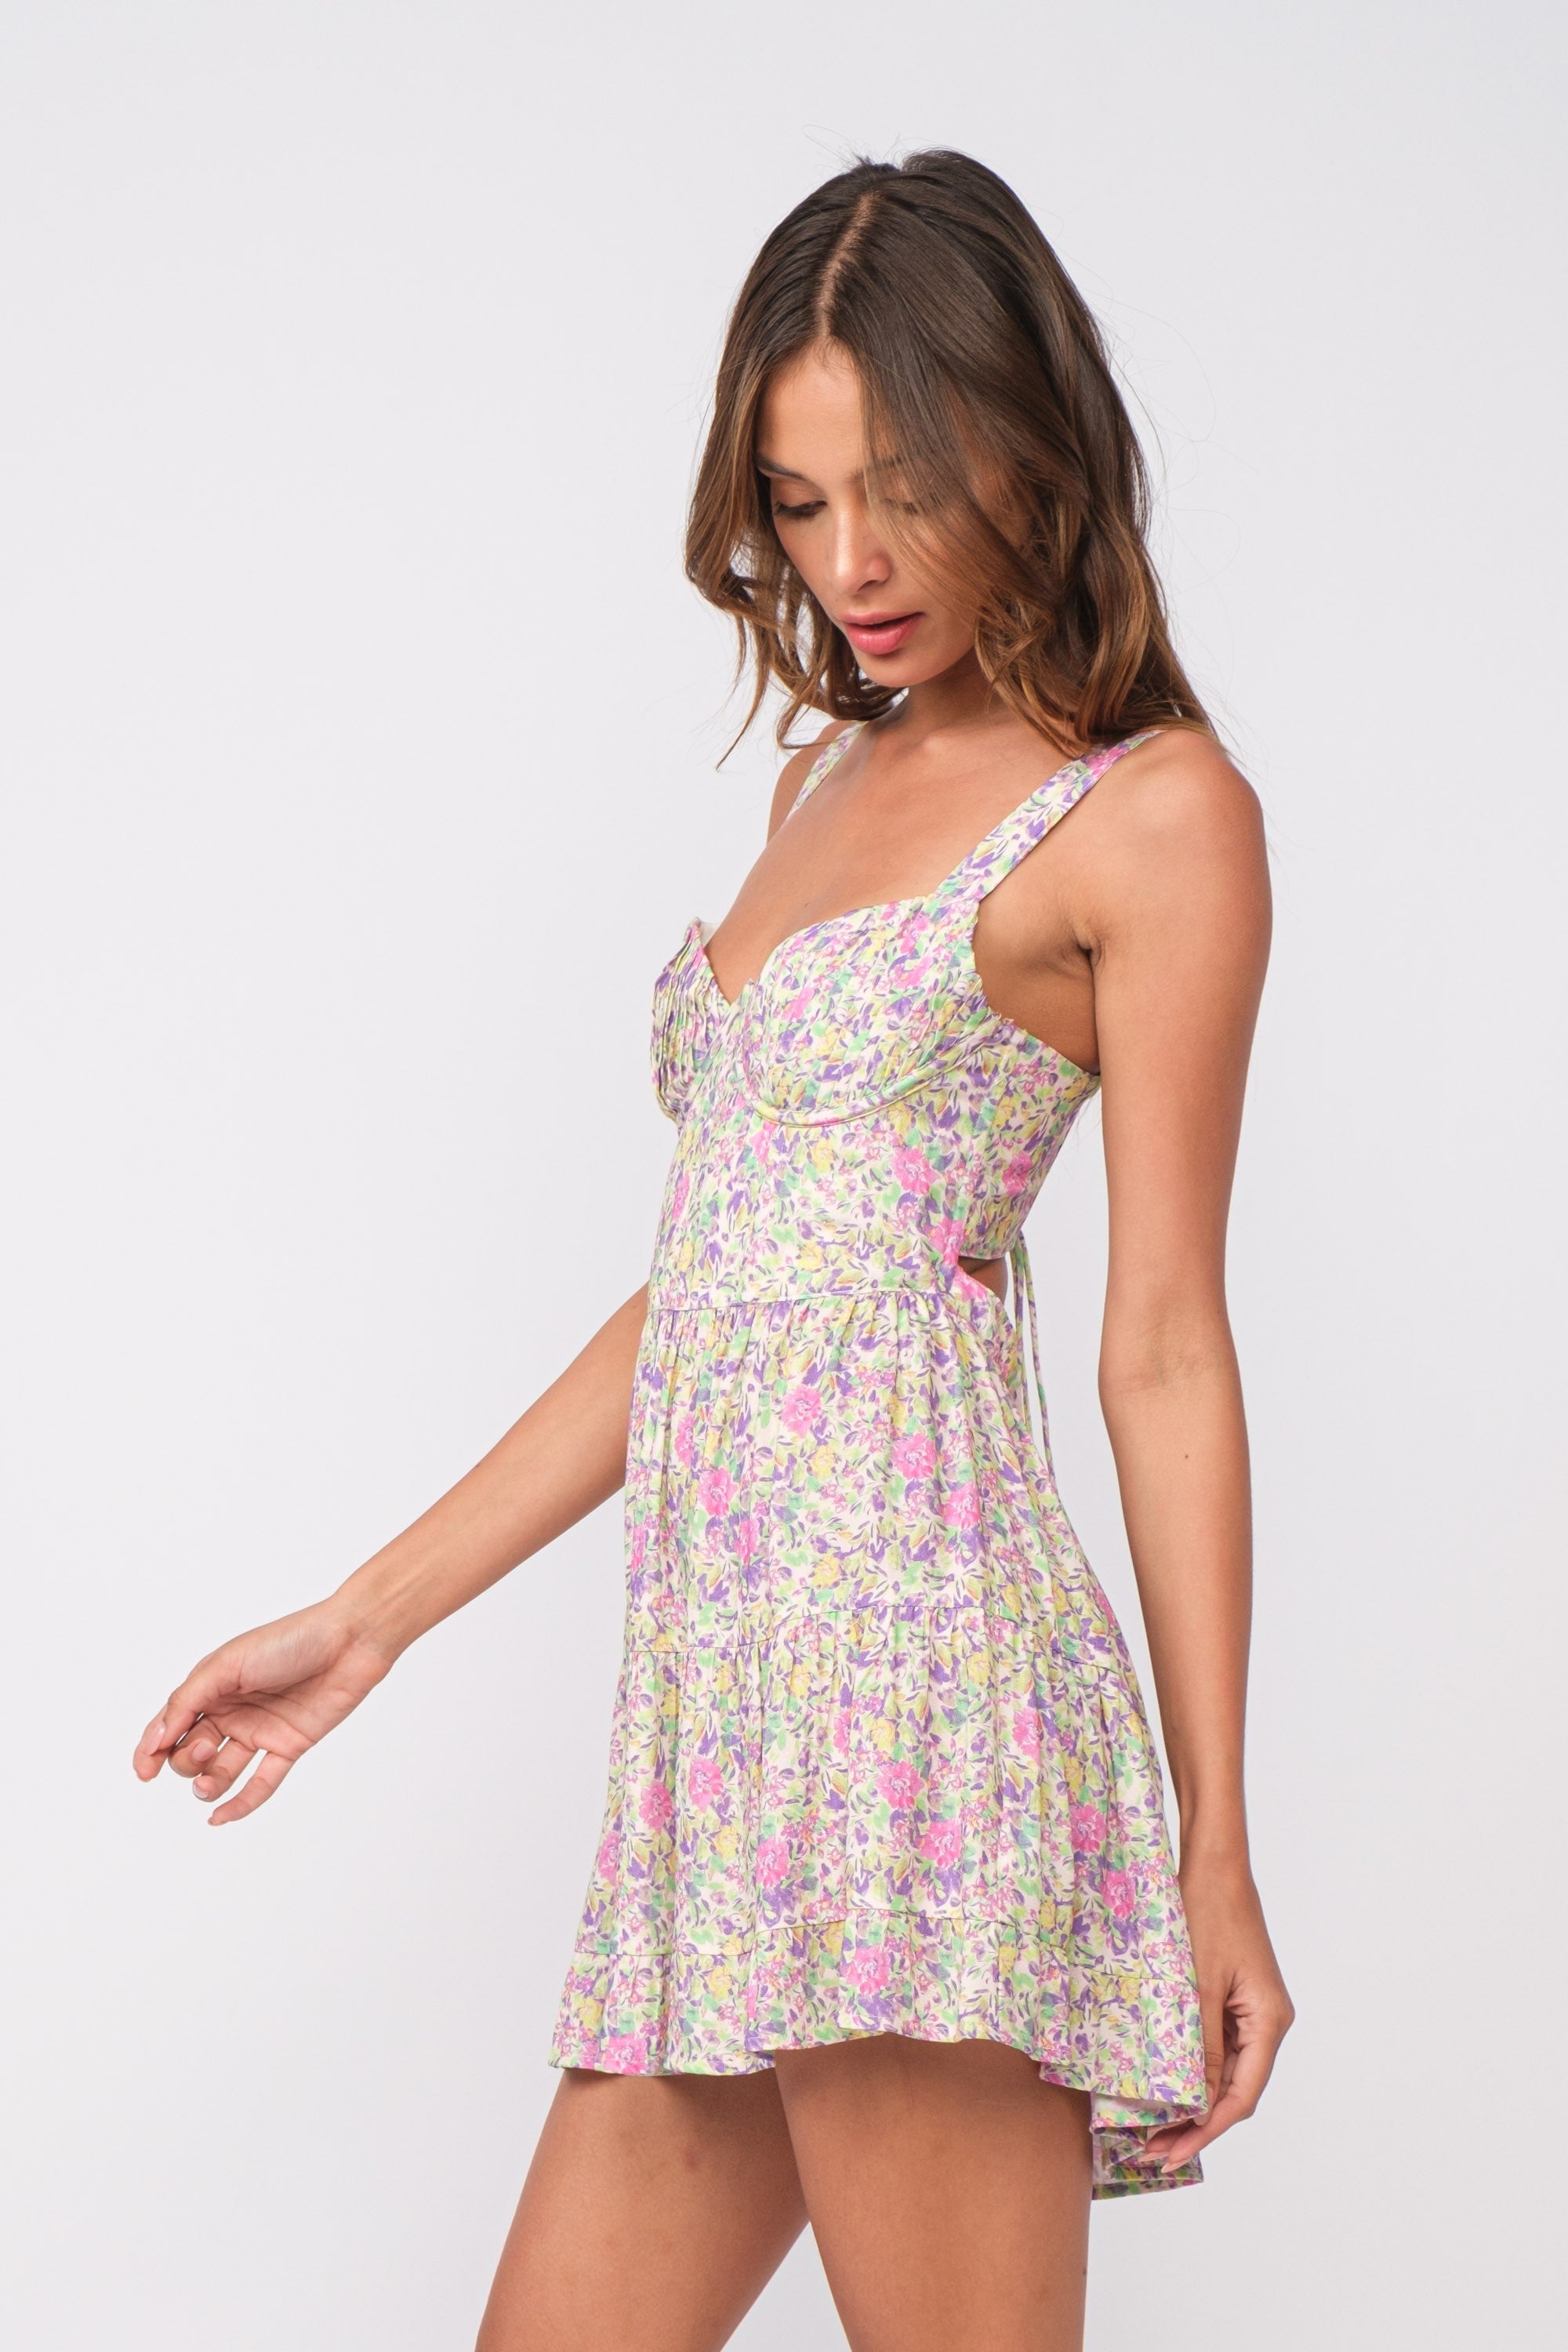 Purple Floral Print Dress - Corset Dress - Mini Dress | Boho Pink